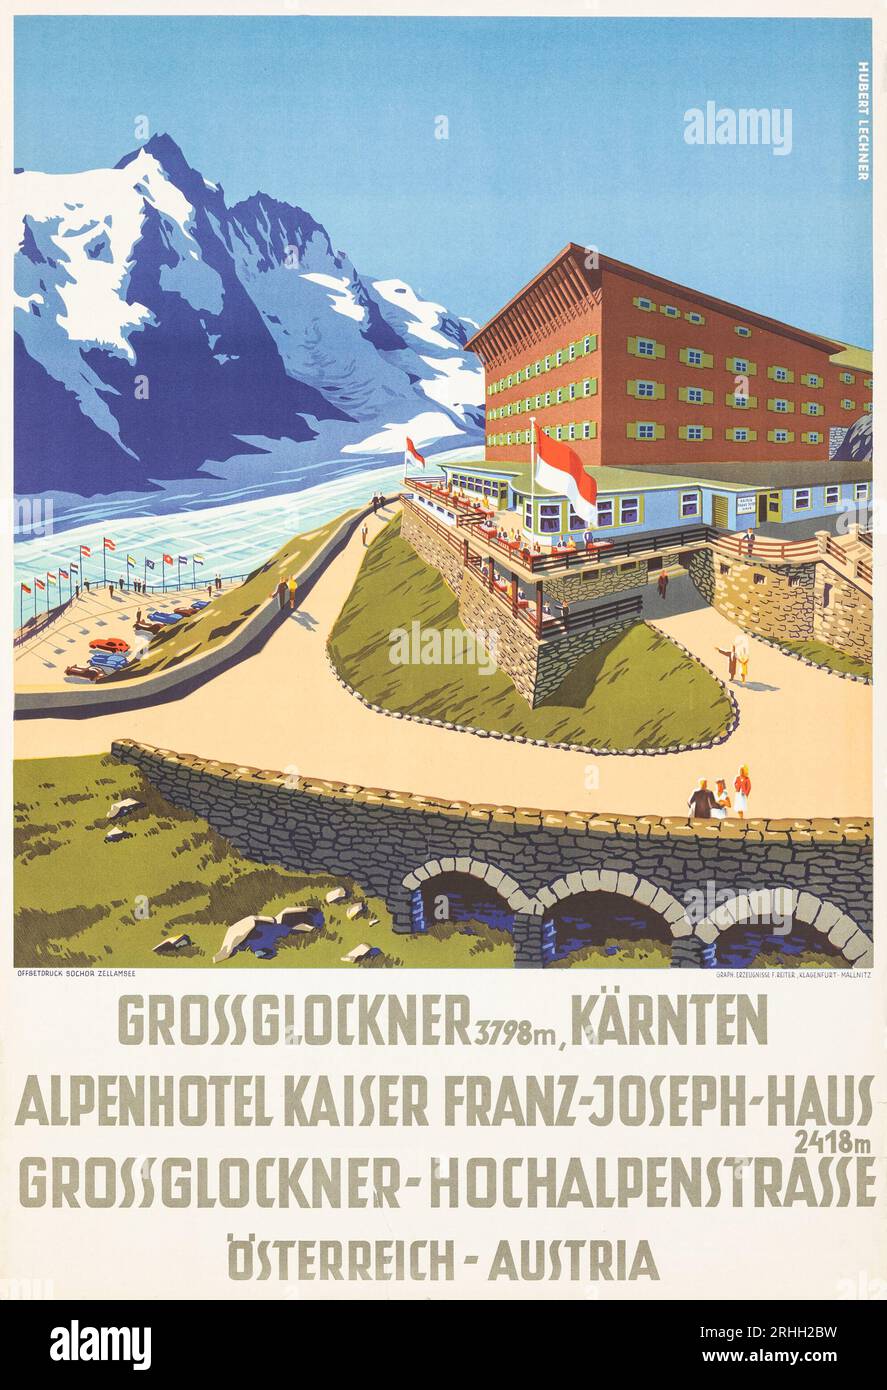 Grossglockner, Austria (anni '1920). Poster di viaggio - opere d'arte di Herbert Lechner - Alpenhotel Kaiser Franz-Joseph-Haus-Austrian Hotel poster Foto Stock